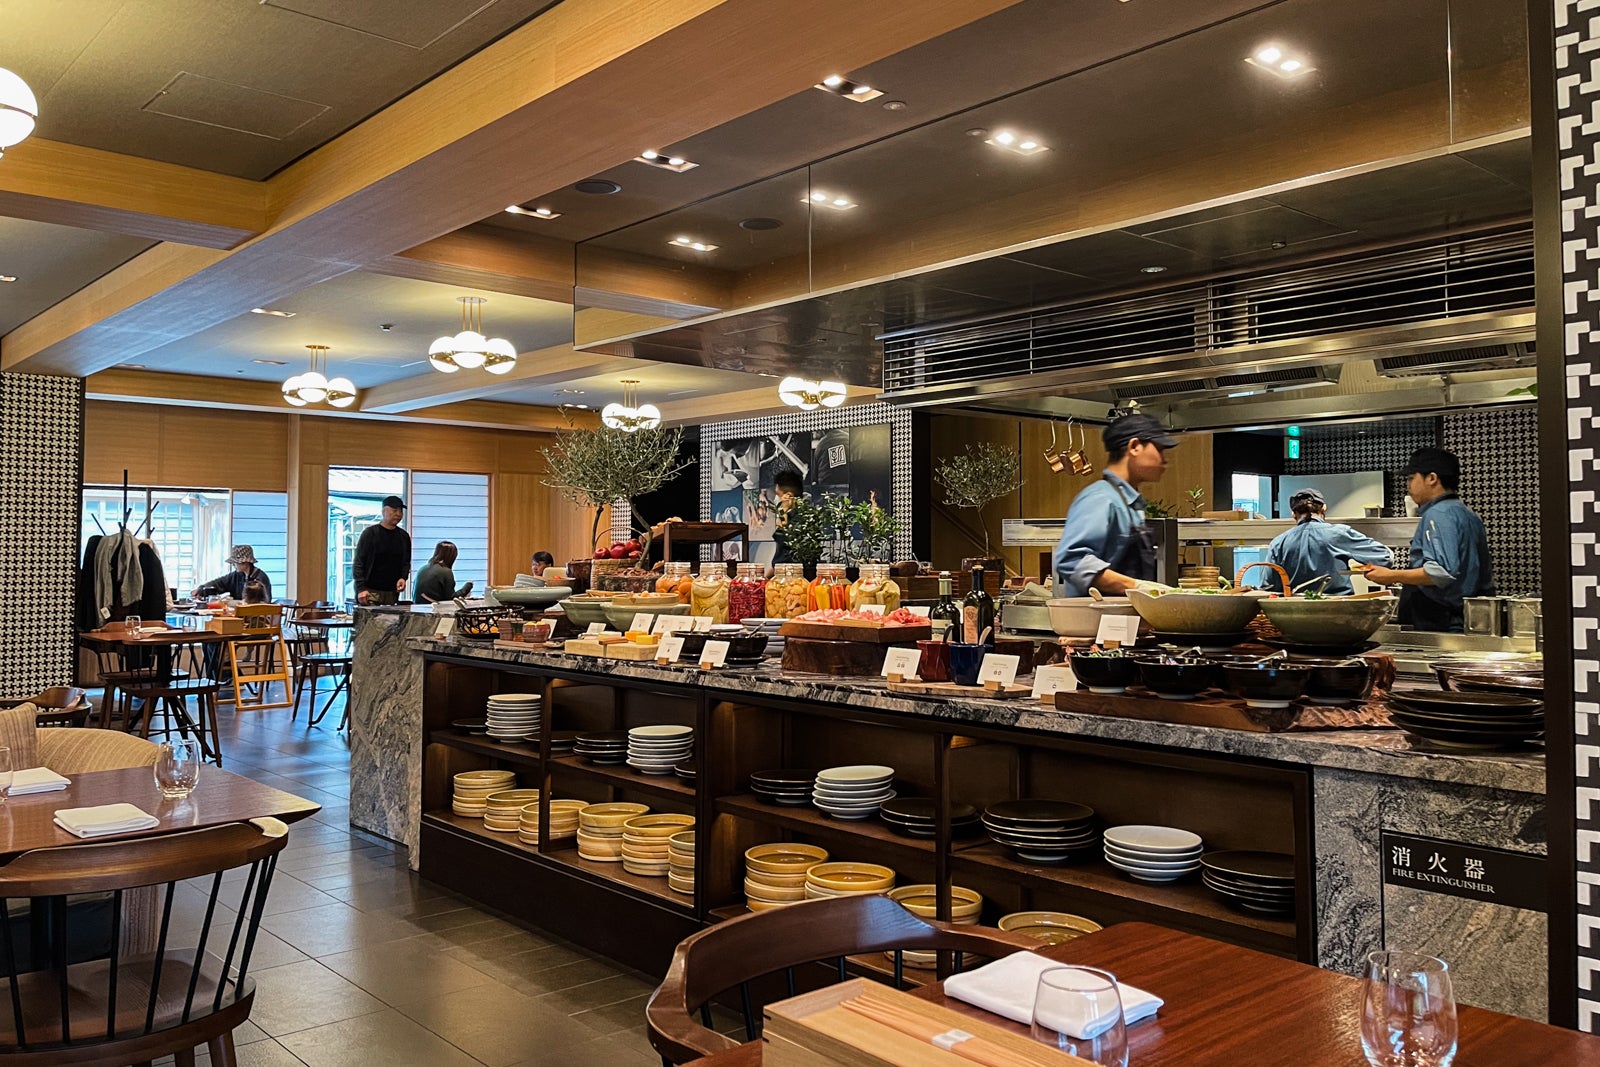 Kyoto Bistro breakfast buffet at Park Hyatt Kyoto